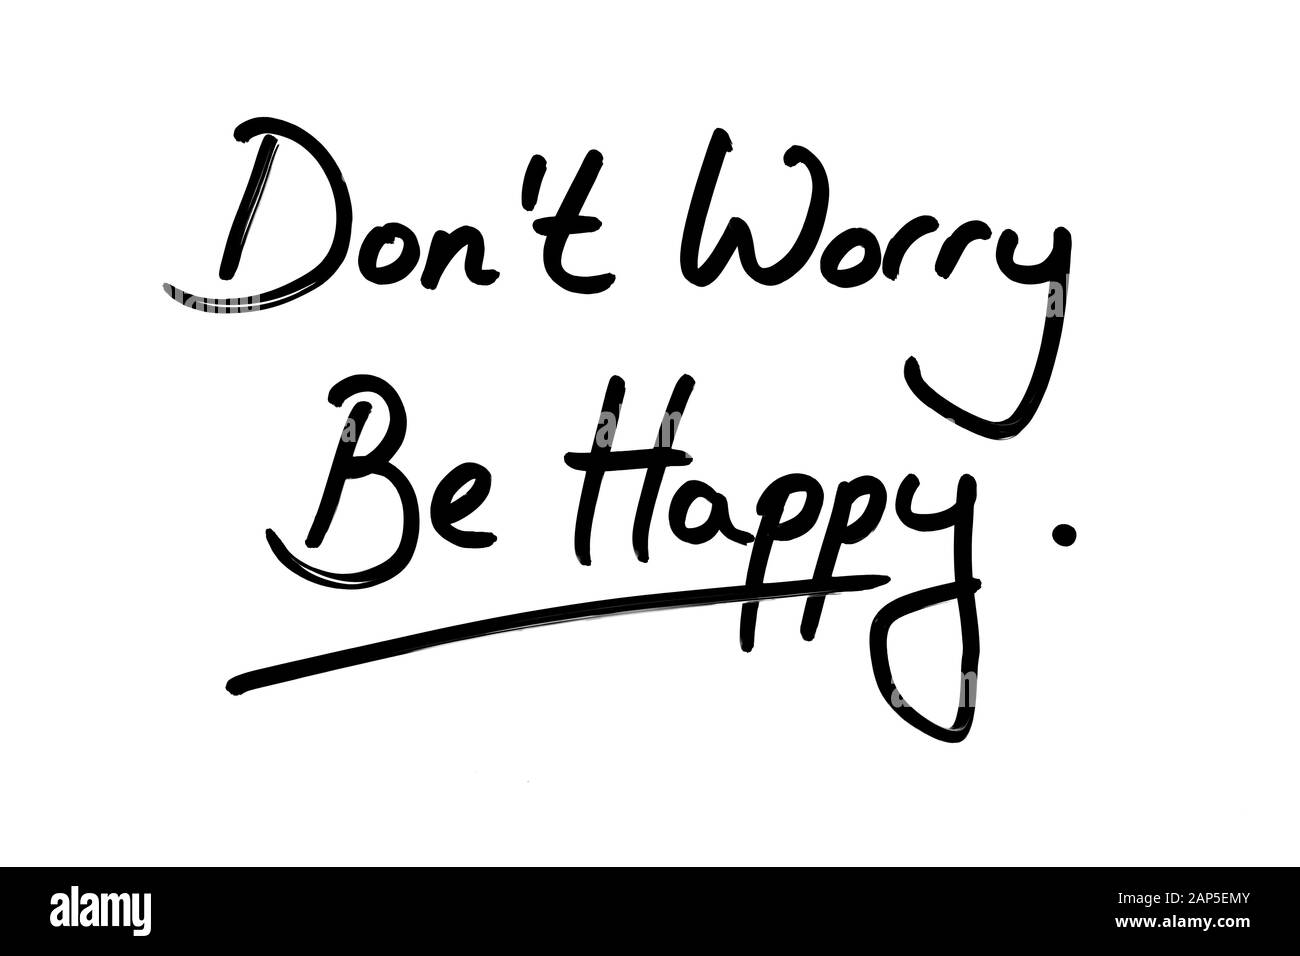 Be happy на русском языке. Надпись don't worry be Happy. Don't worry be Happy картинки. Be Happy надпись. Надпись донт вори би Хэппи.